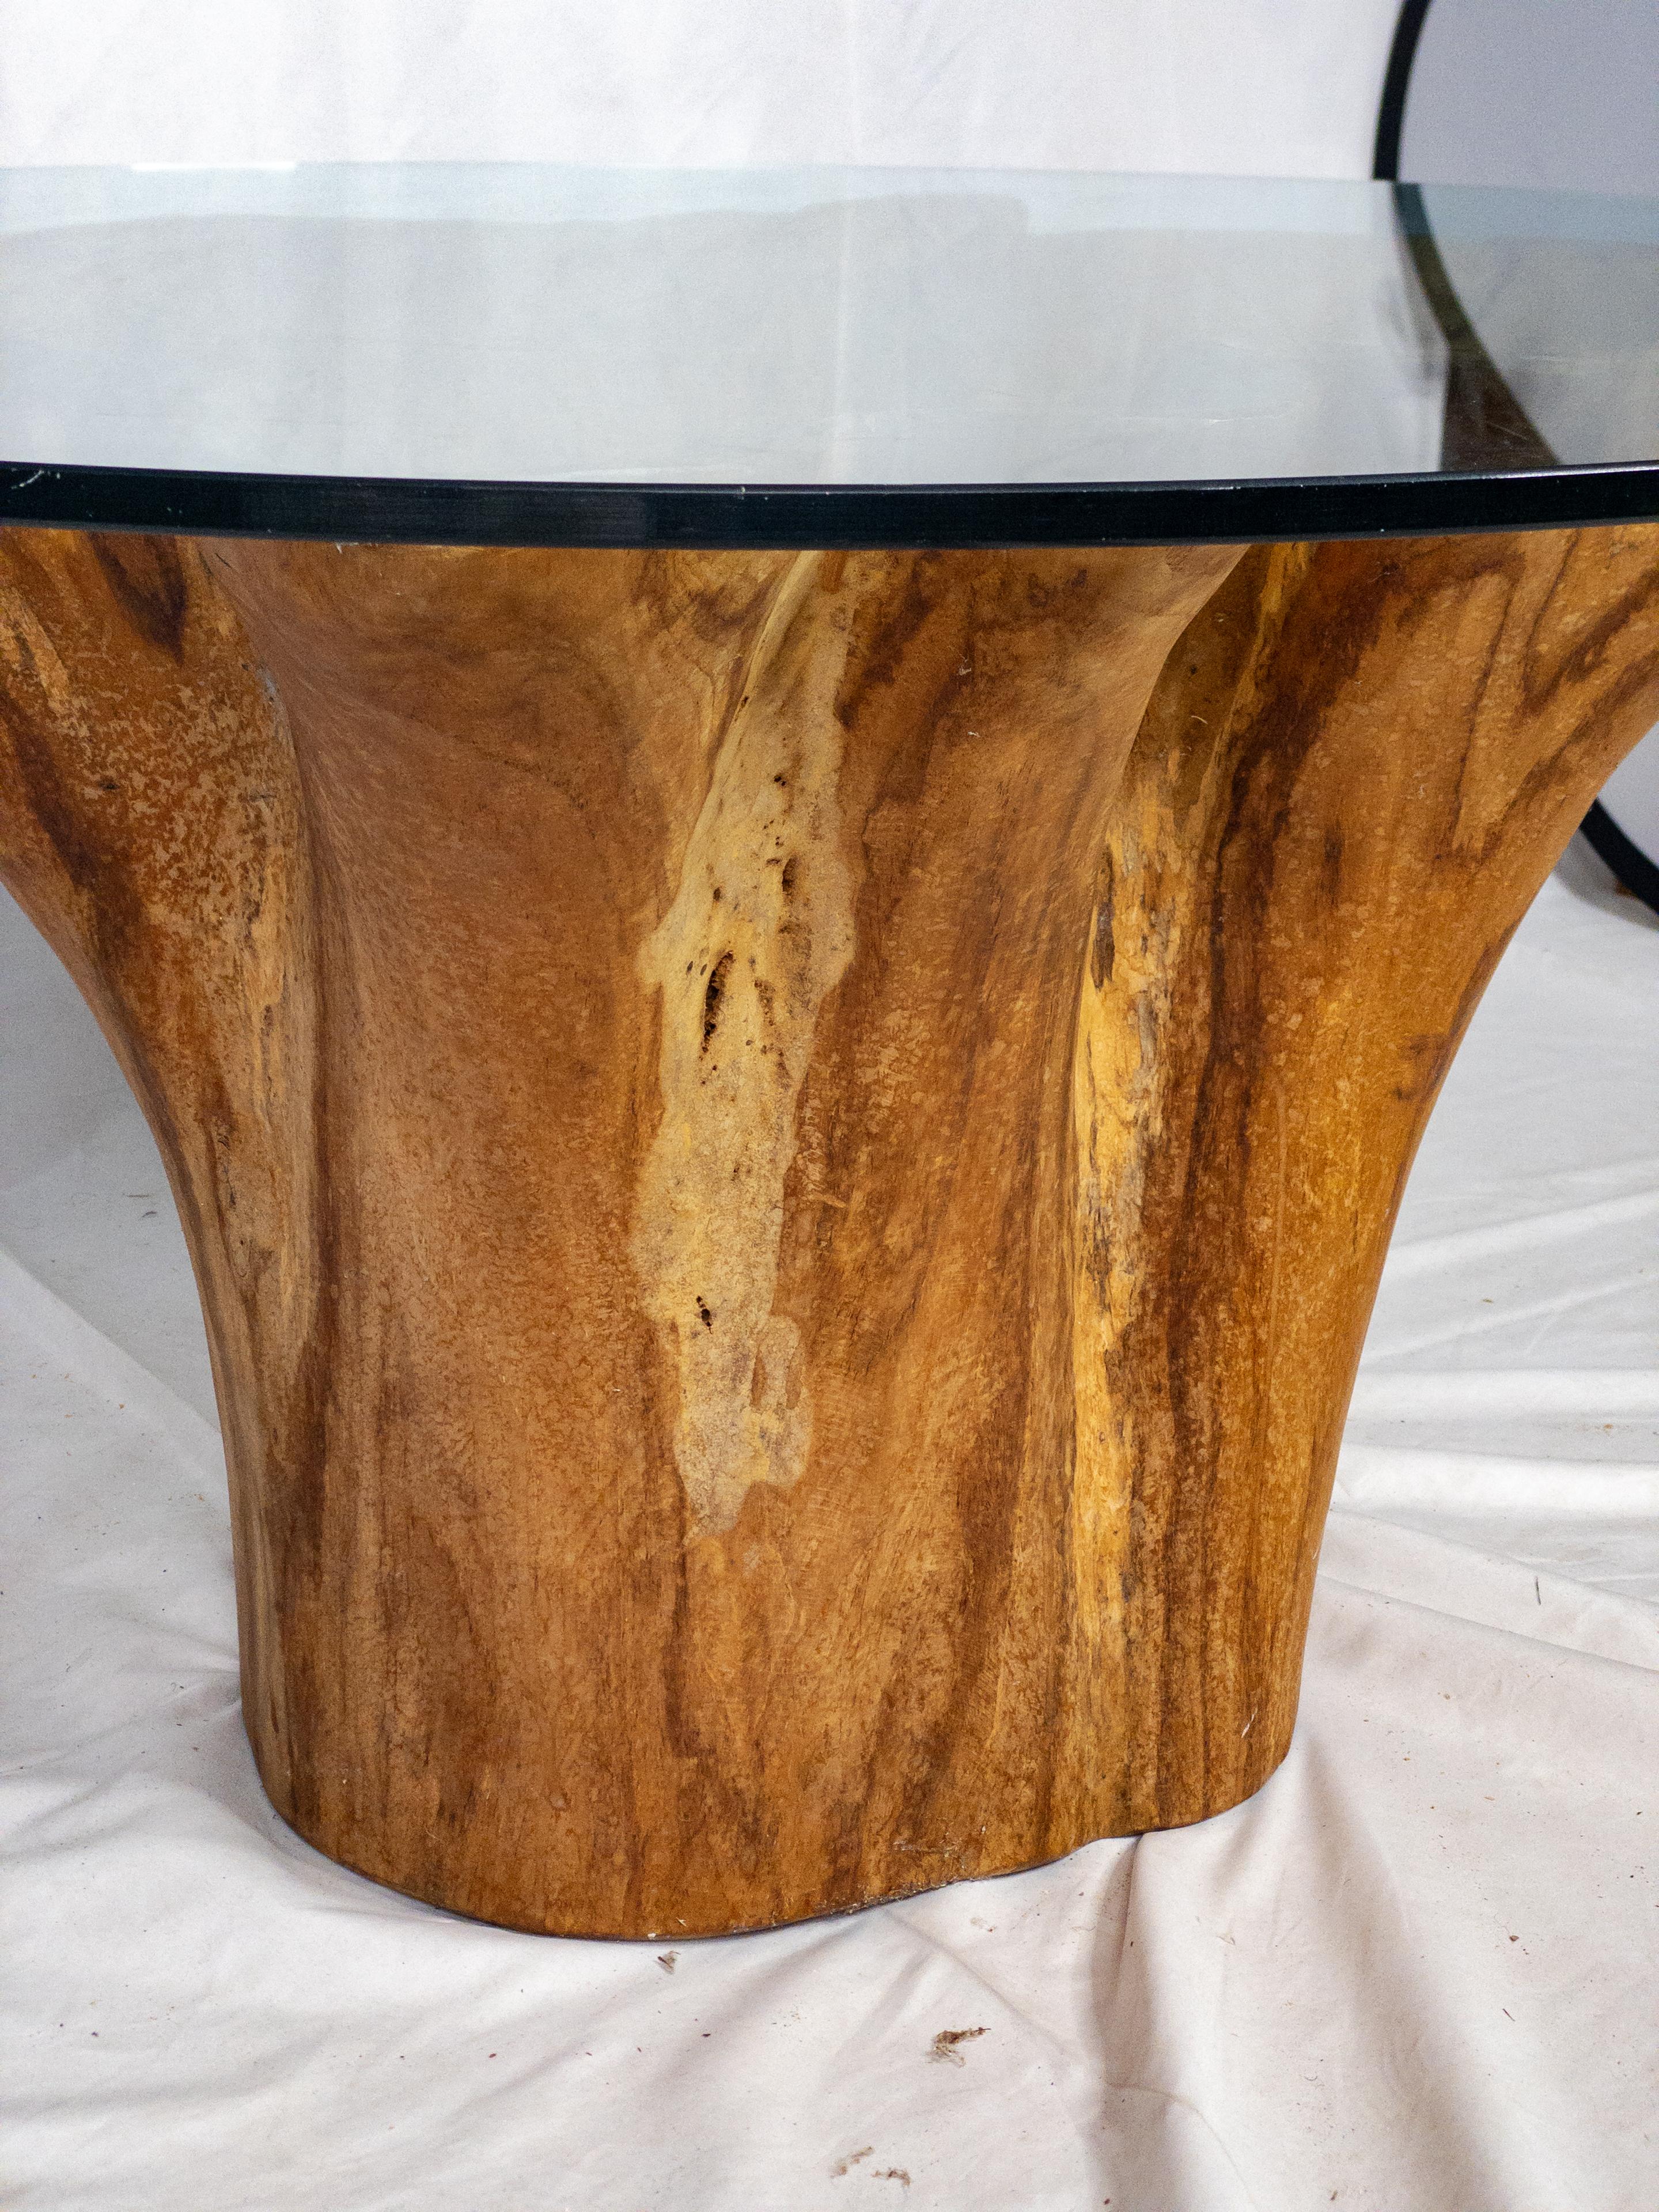 hollow log coffee table